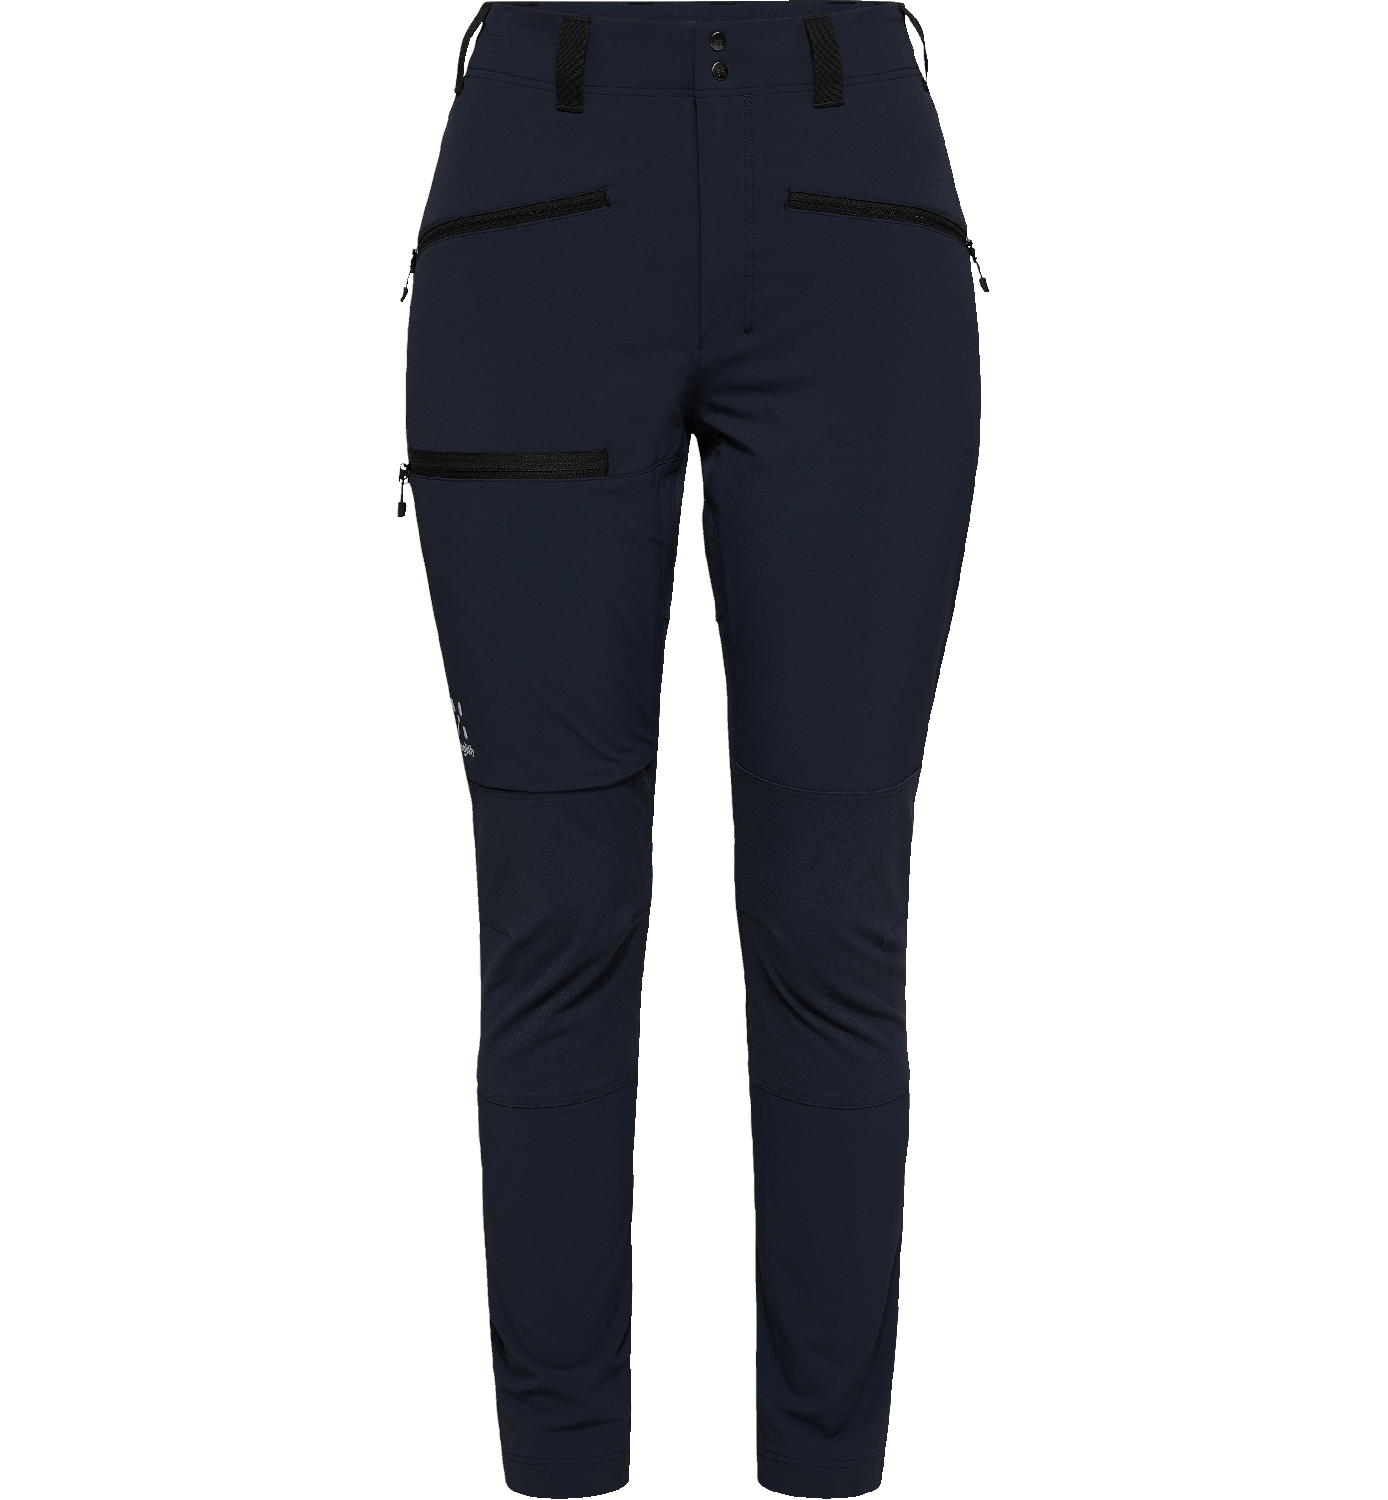 Women's Mid Slim Pant Tarn Blue/True Black